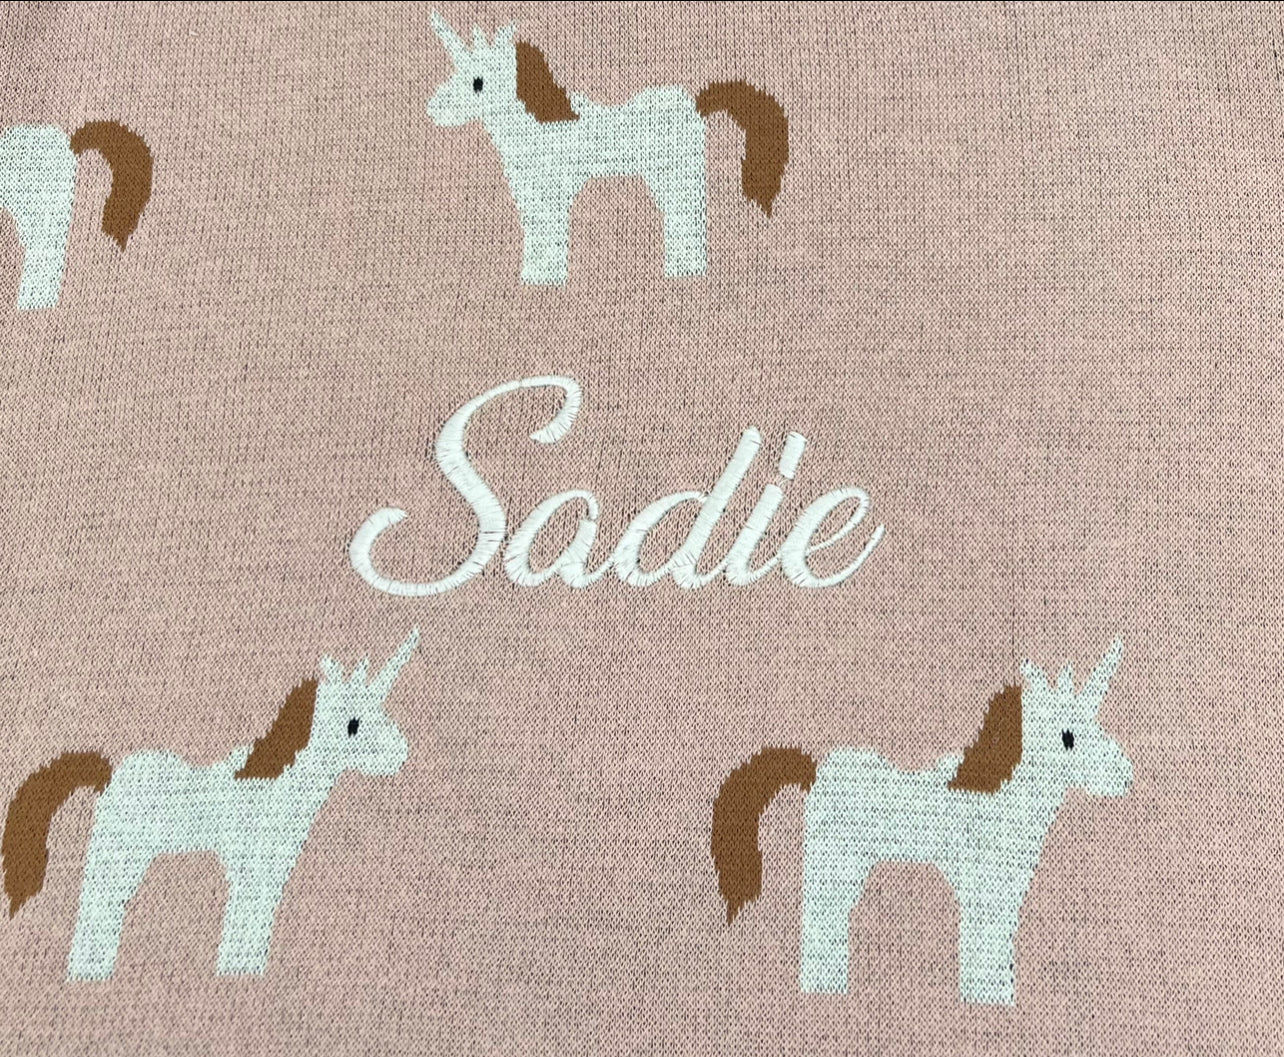 Personalized Blanket - Pink Unicorn